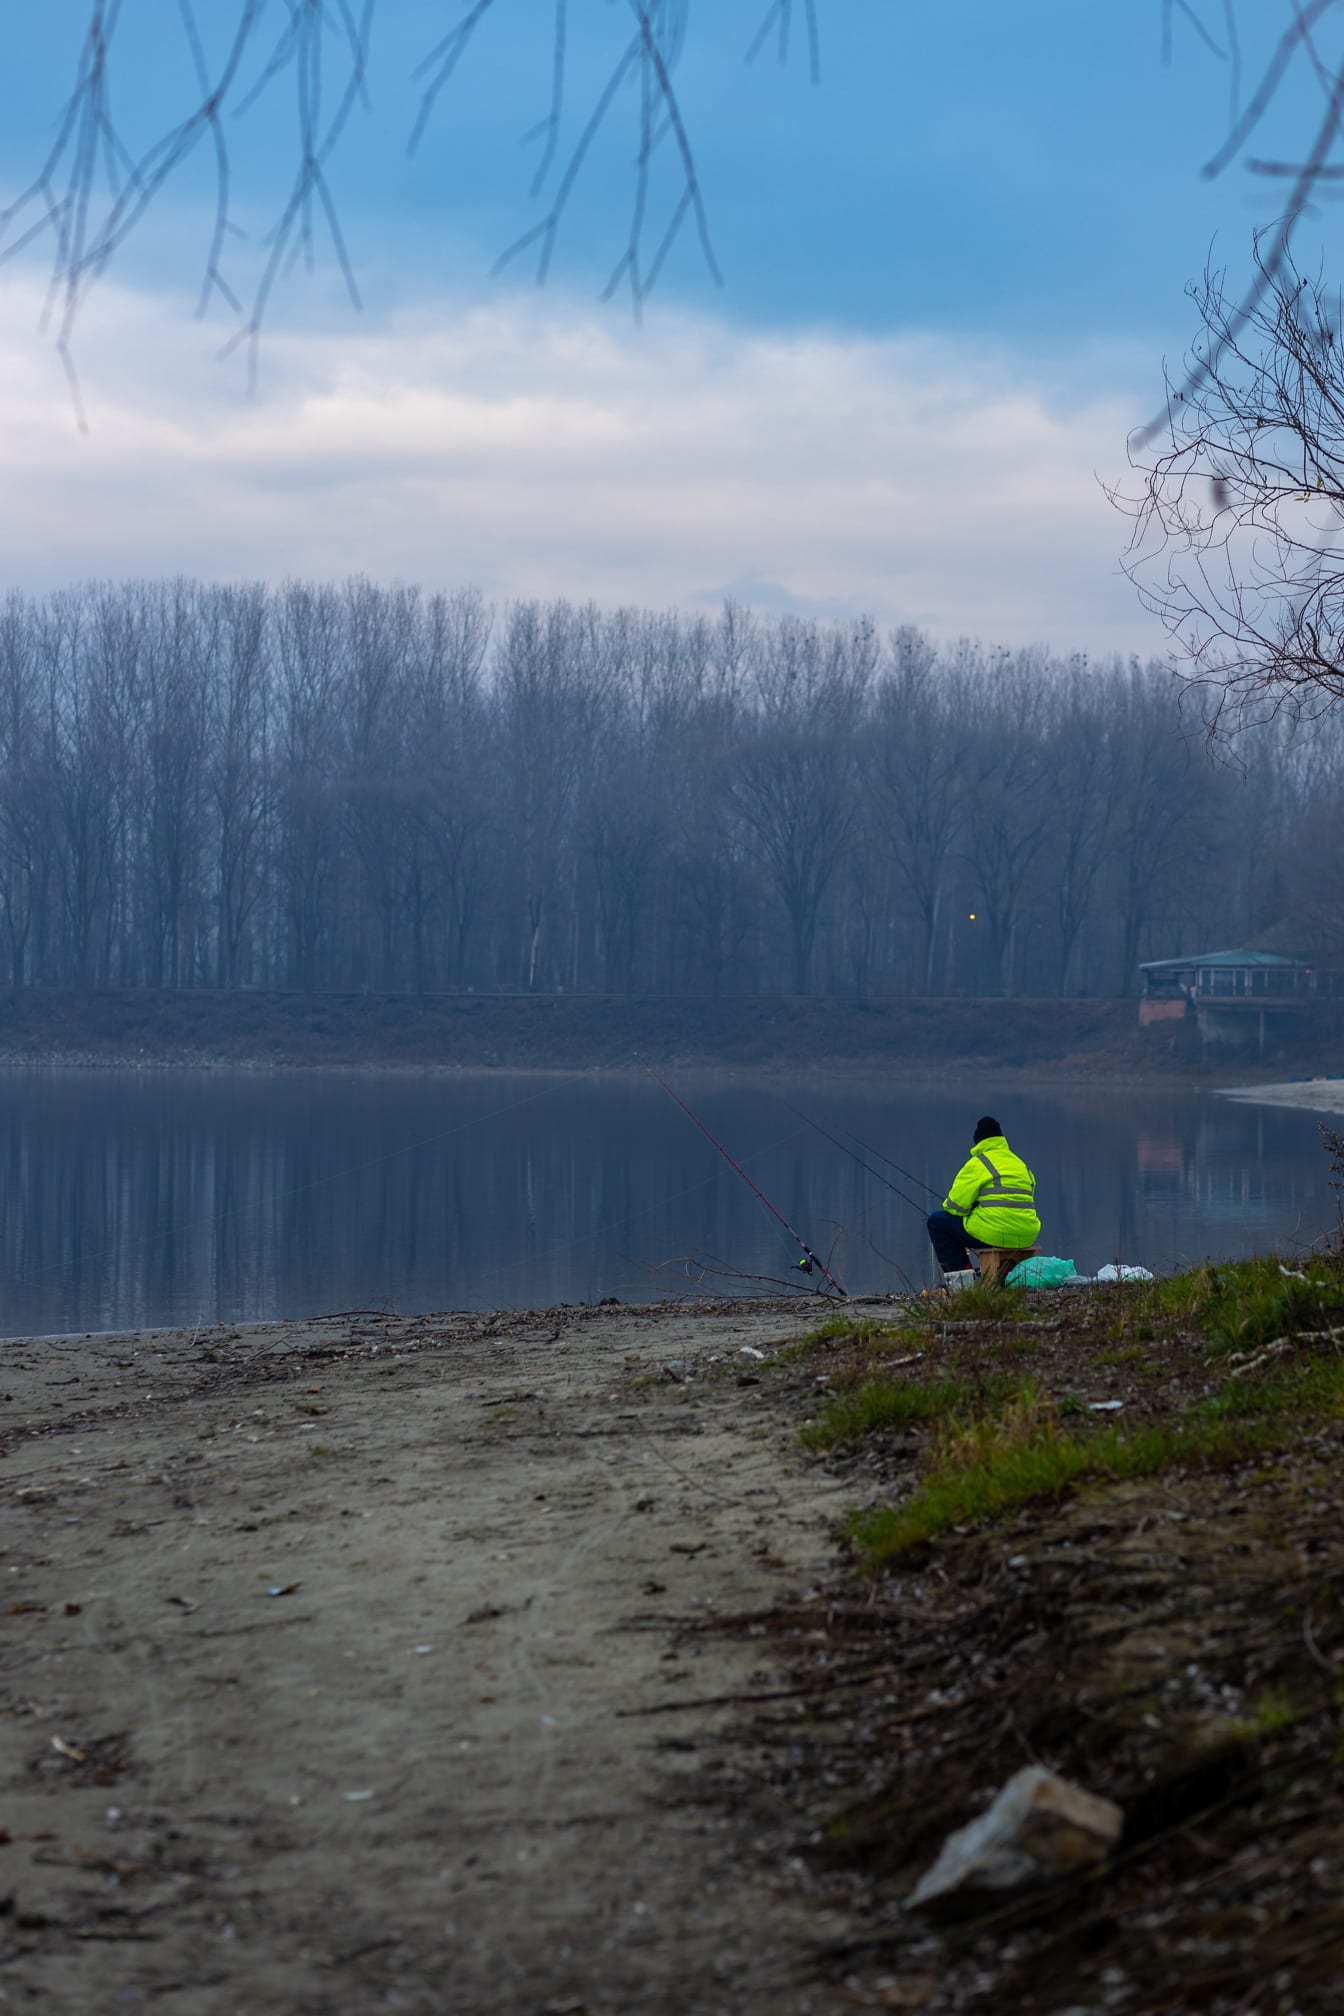 Fisherman sitting on riverbank in greenish yellow jacket